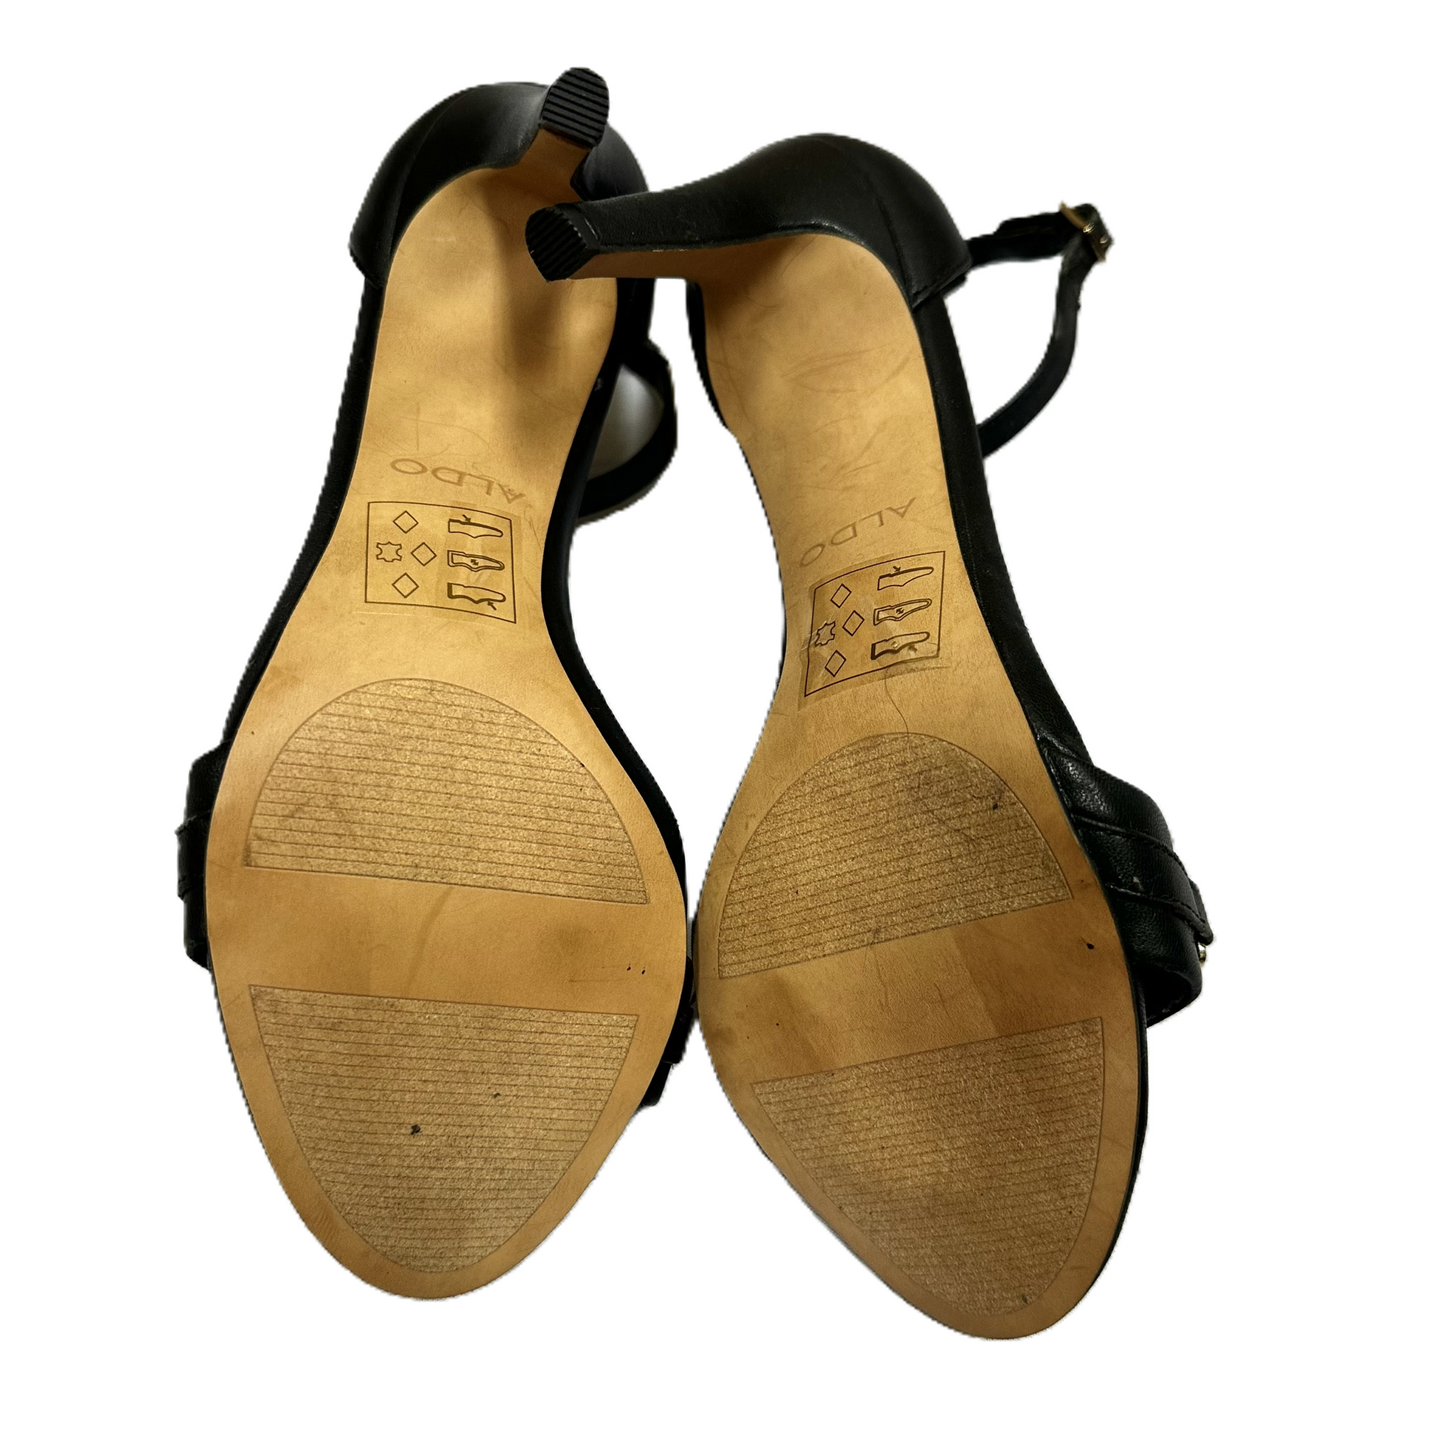 Sandals Heels Stiletto By Aldo  Size: 7.5